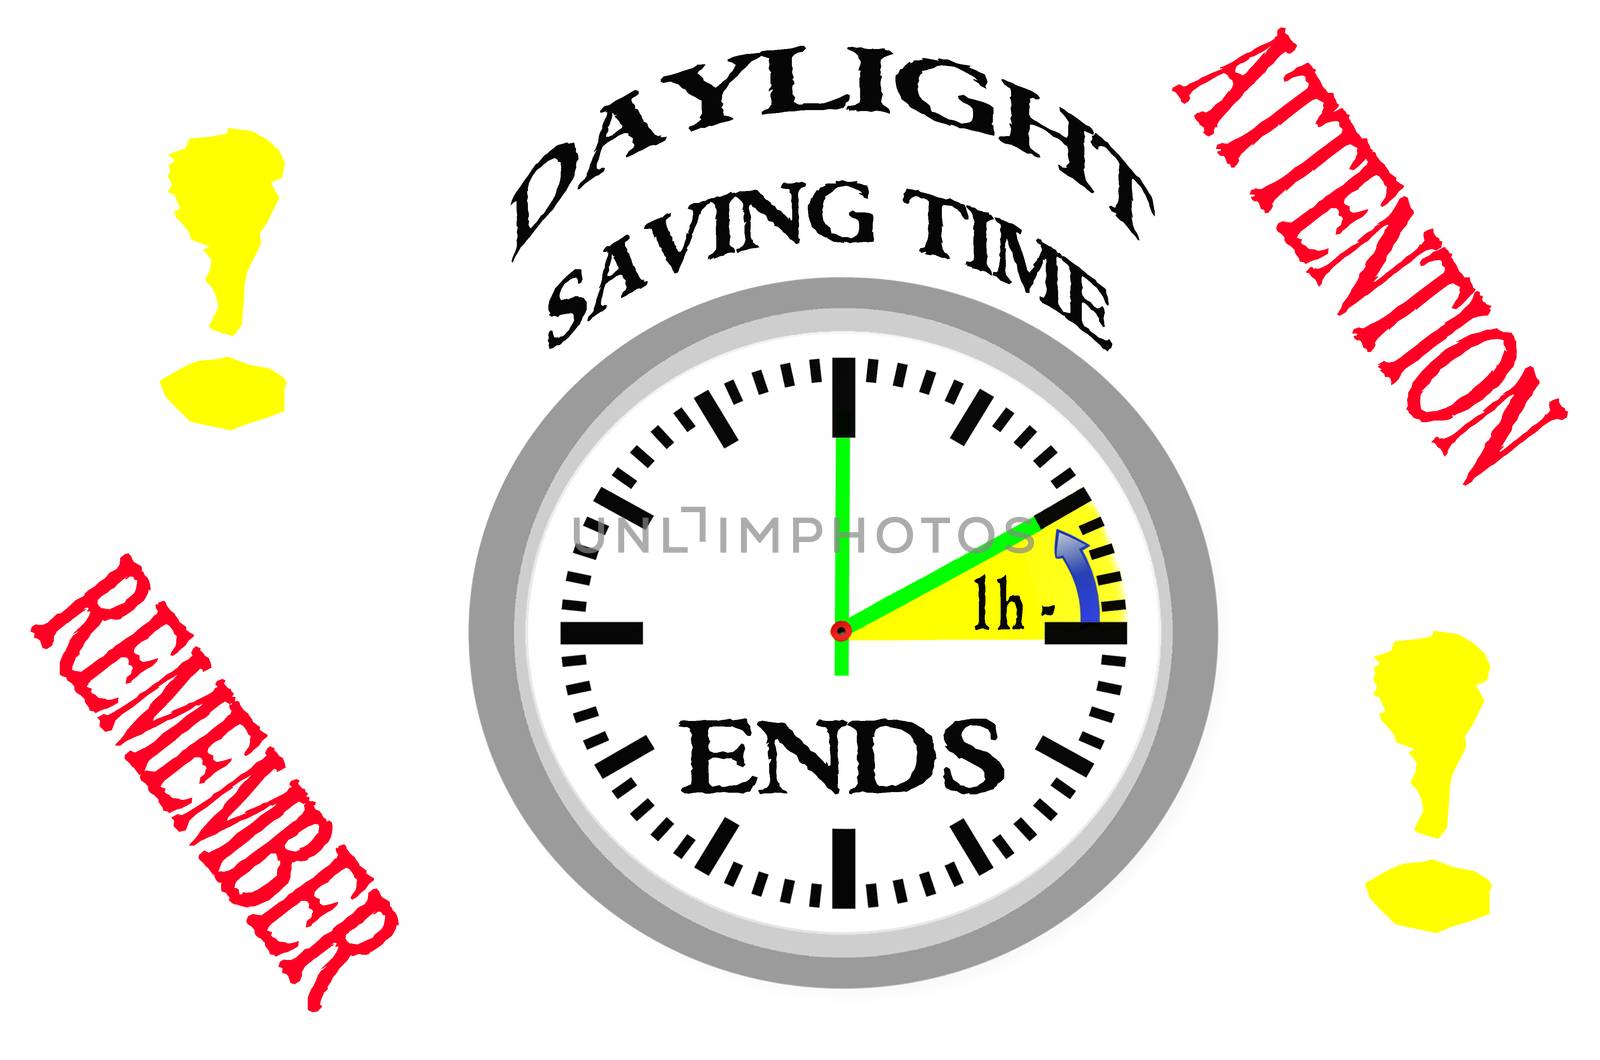 Daylight saving time ends. by JFsPic